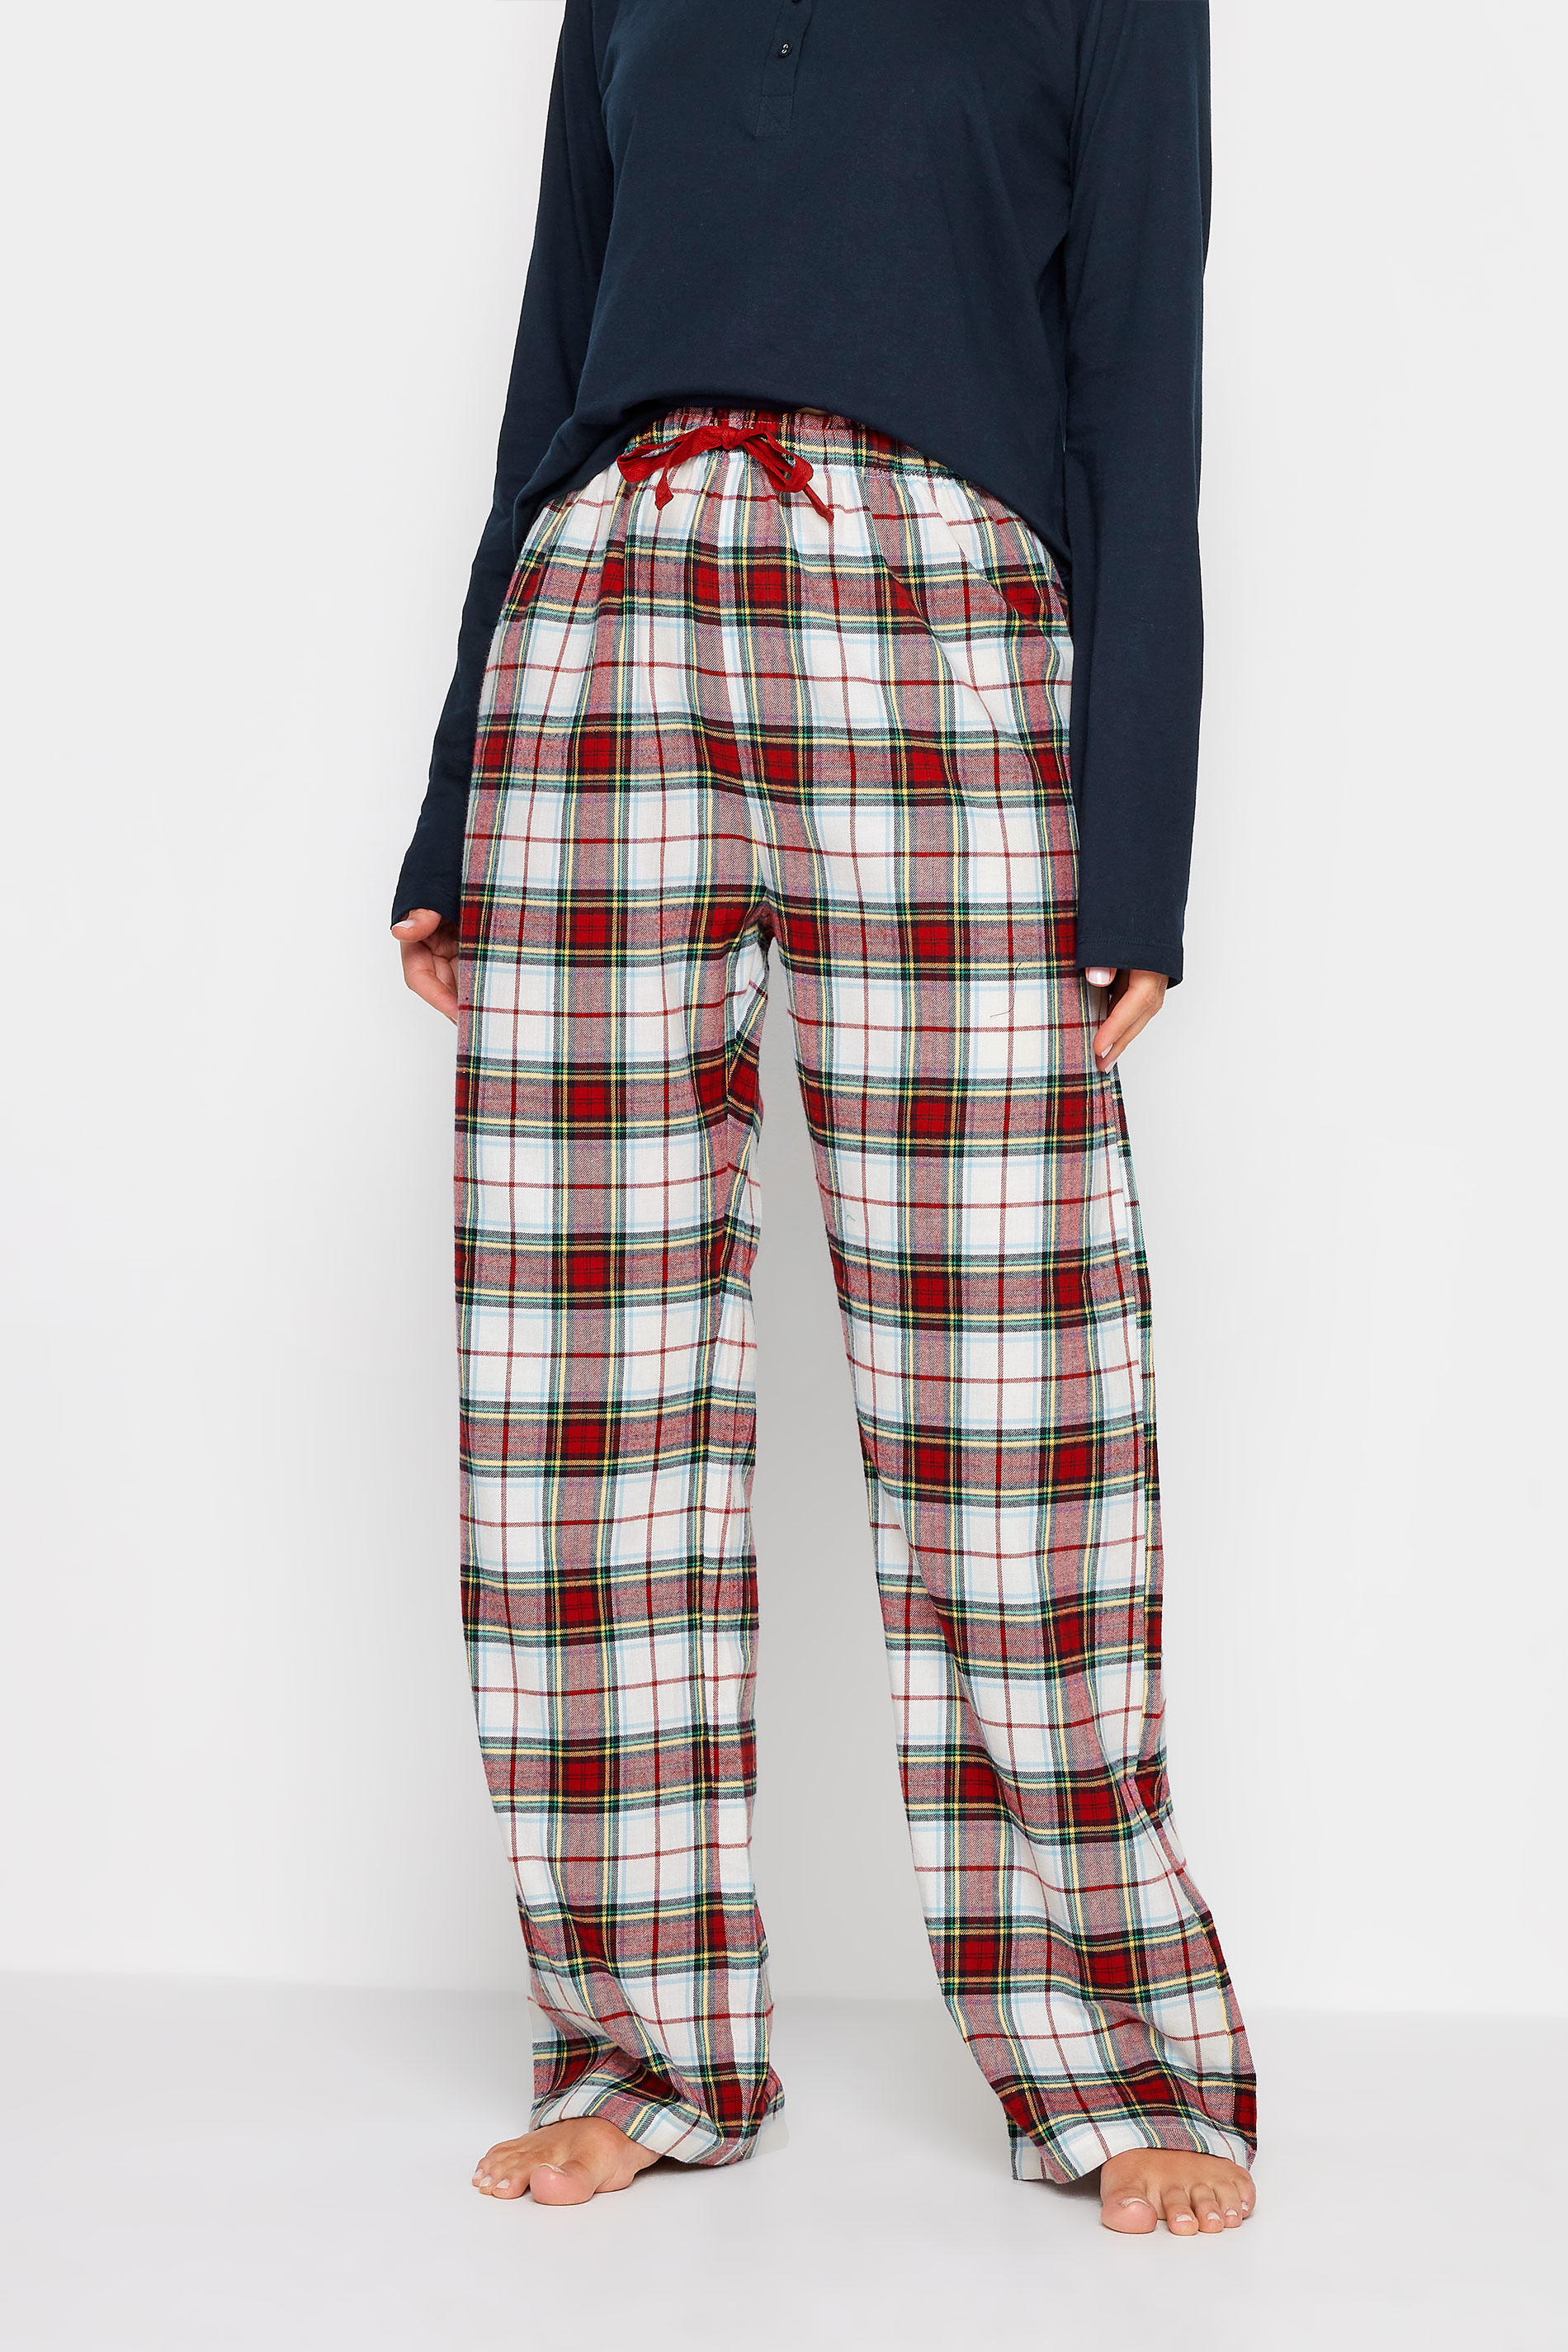 LTS Tall White & Red Tartan Pyjama Bottoms | Long Tall Sally